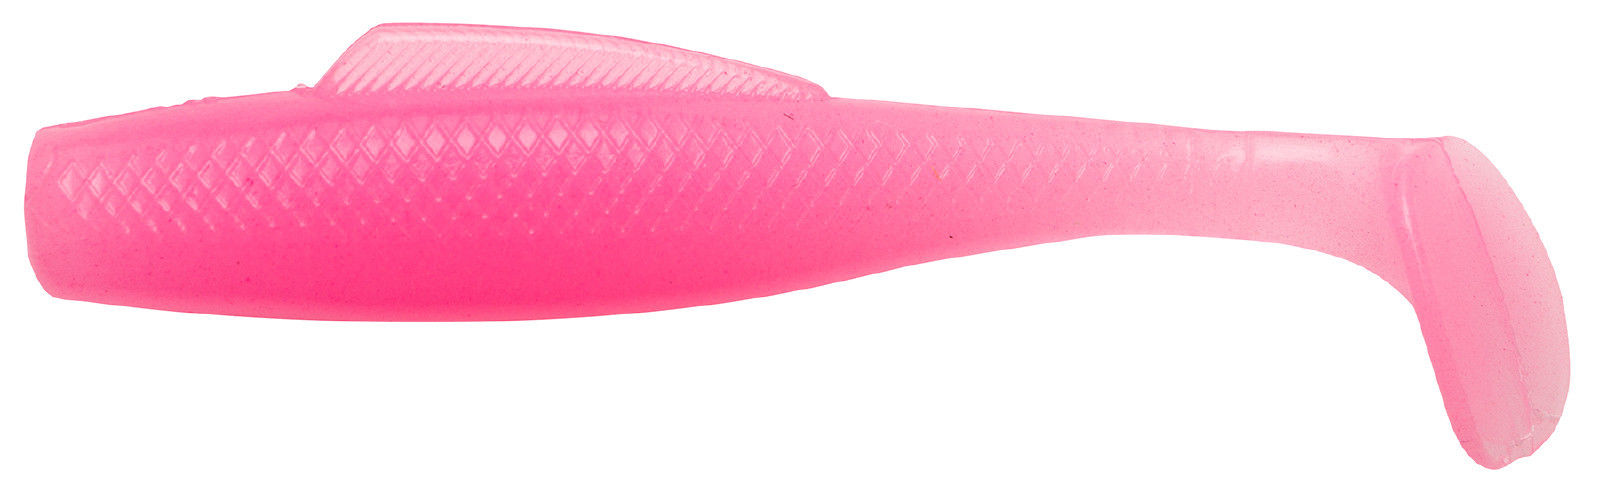 13 FISHING - Churro - Soft Plastic Paddle Tail Swimbaits